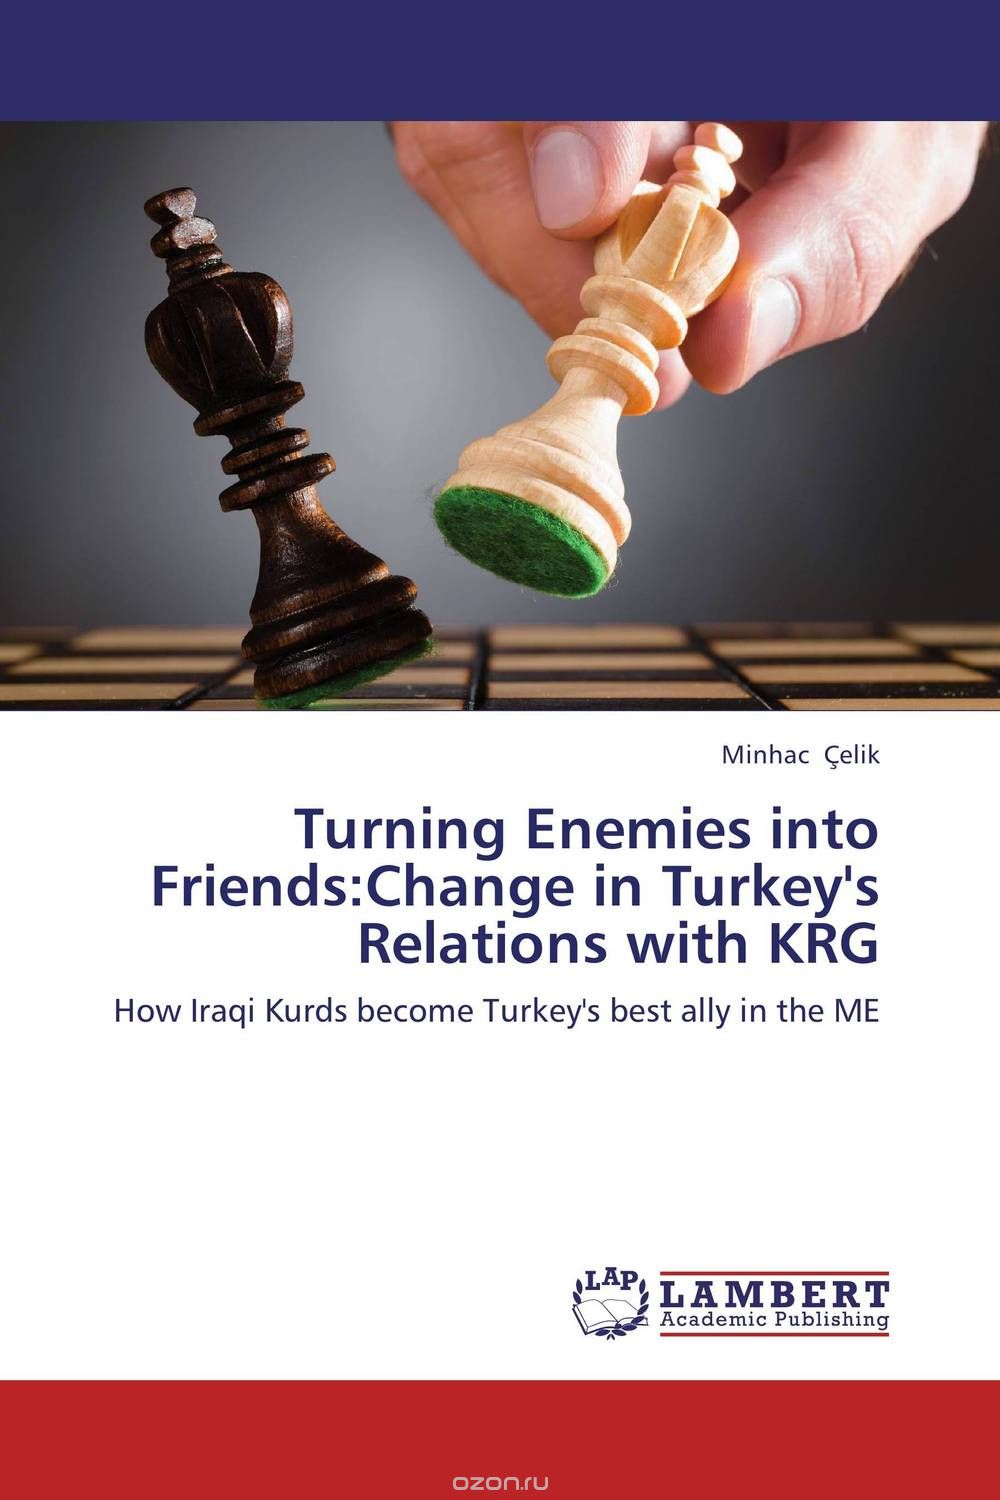 Скачать книгу "Turning Enemies into Friends:Change in Turkey's Relations with KRG"